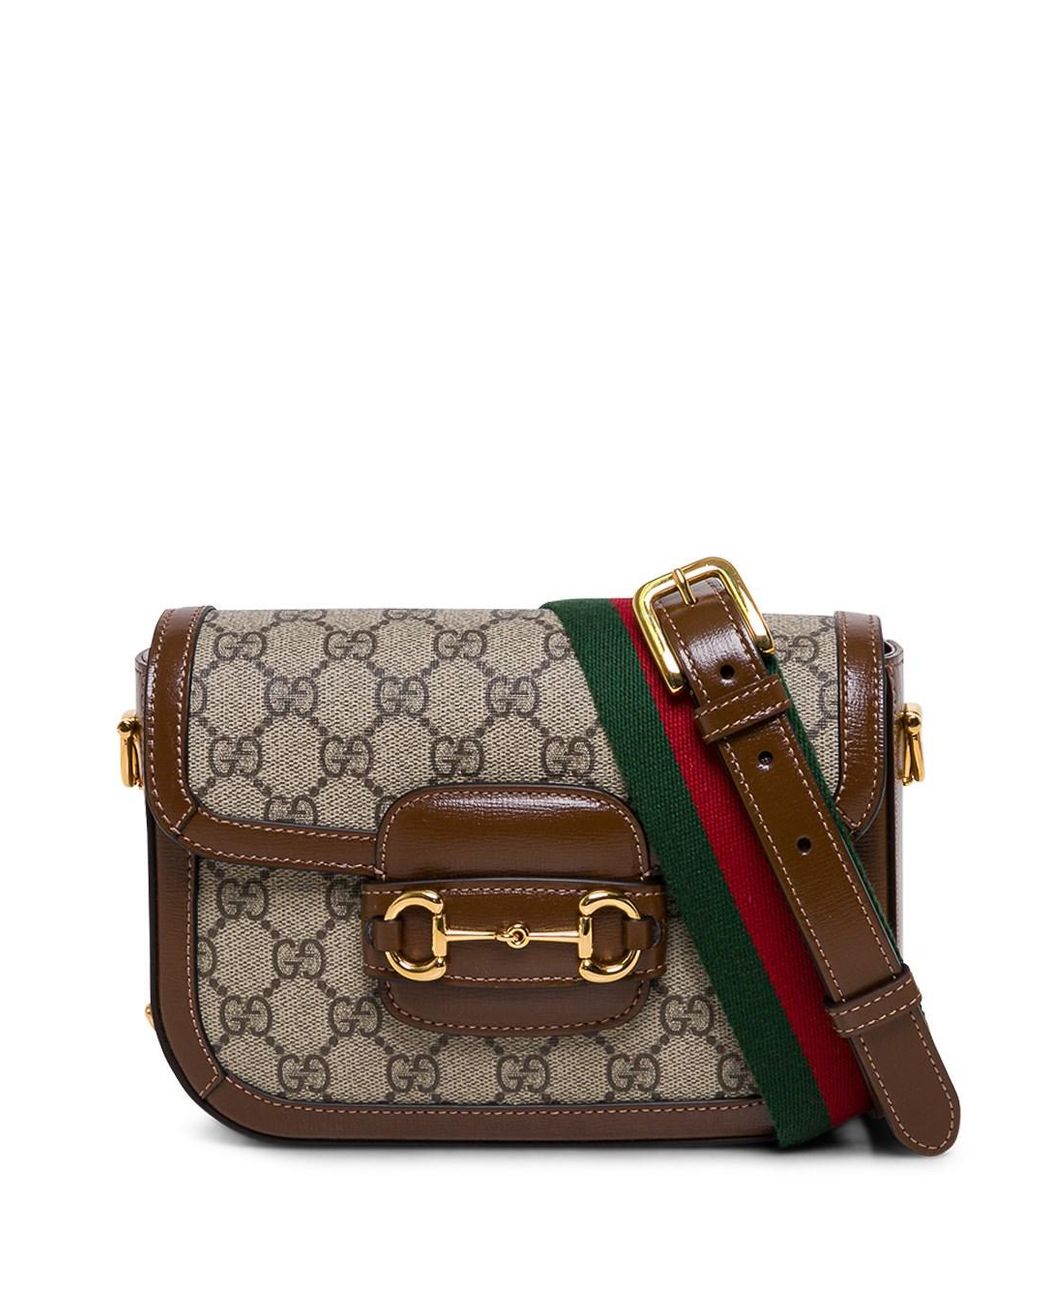 Gucci Woman's Horsebit 1955 gg Fabric Crossbody Bag in Brown | Lyst